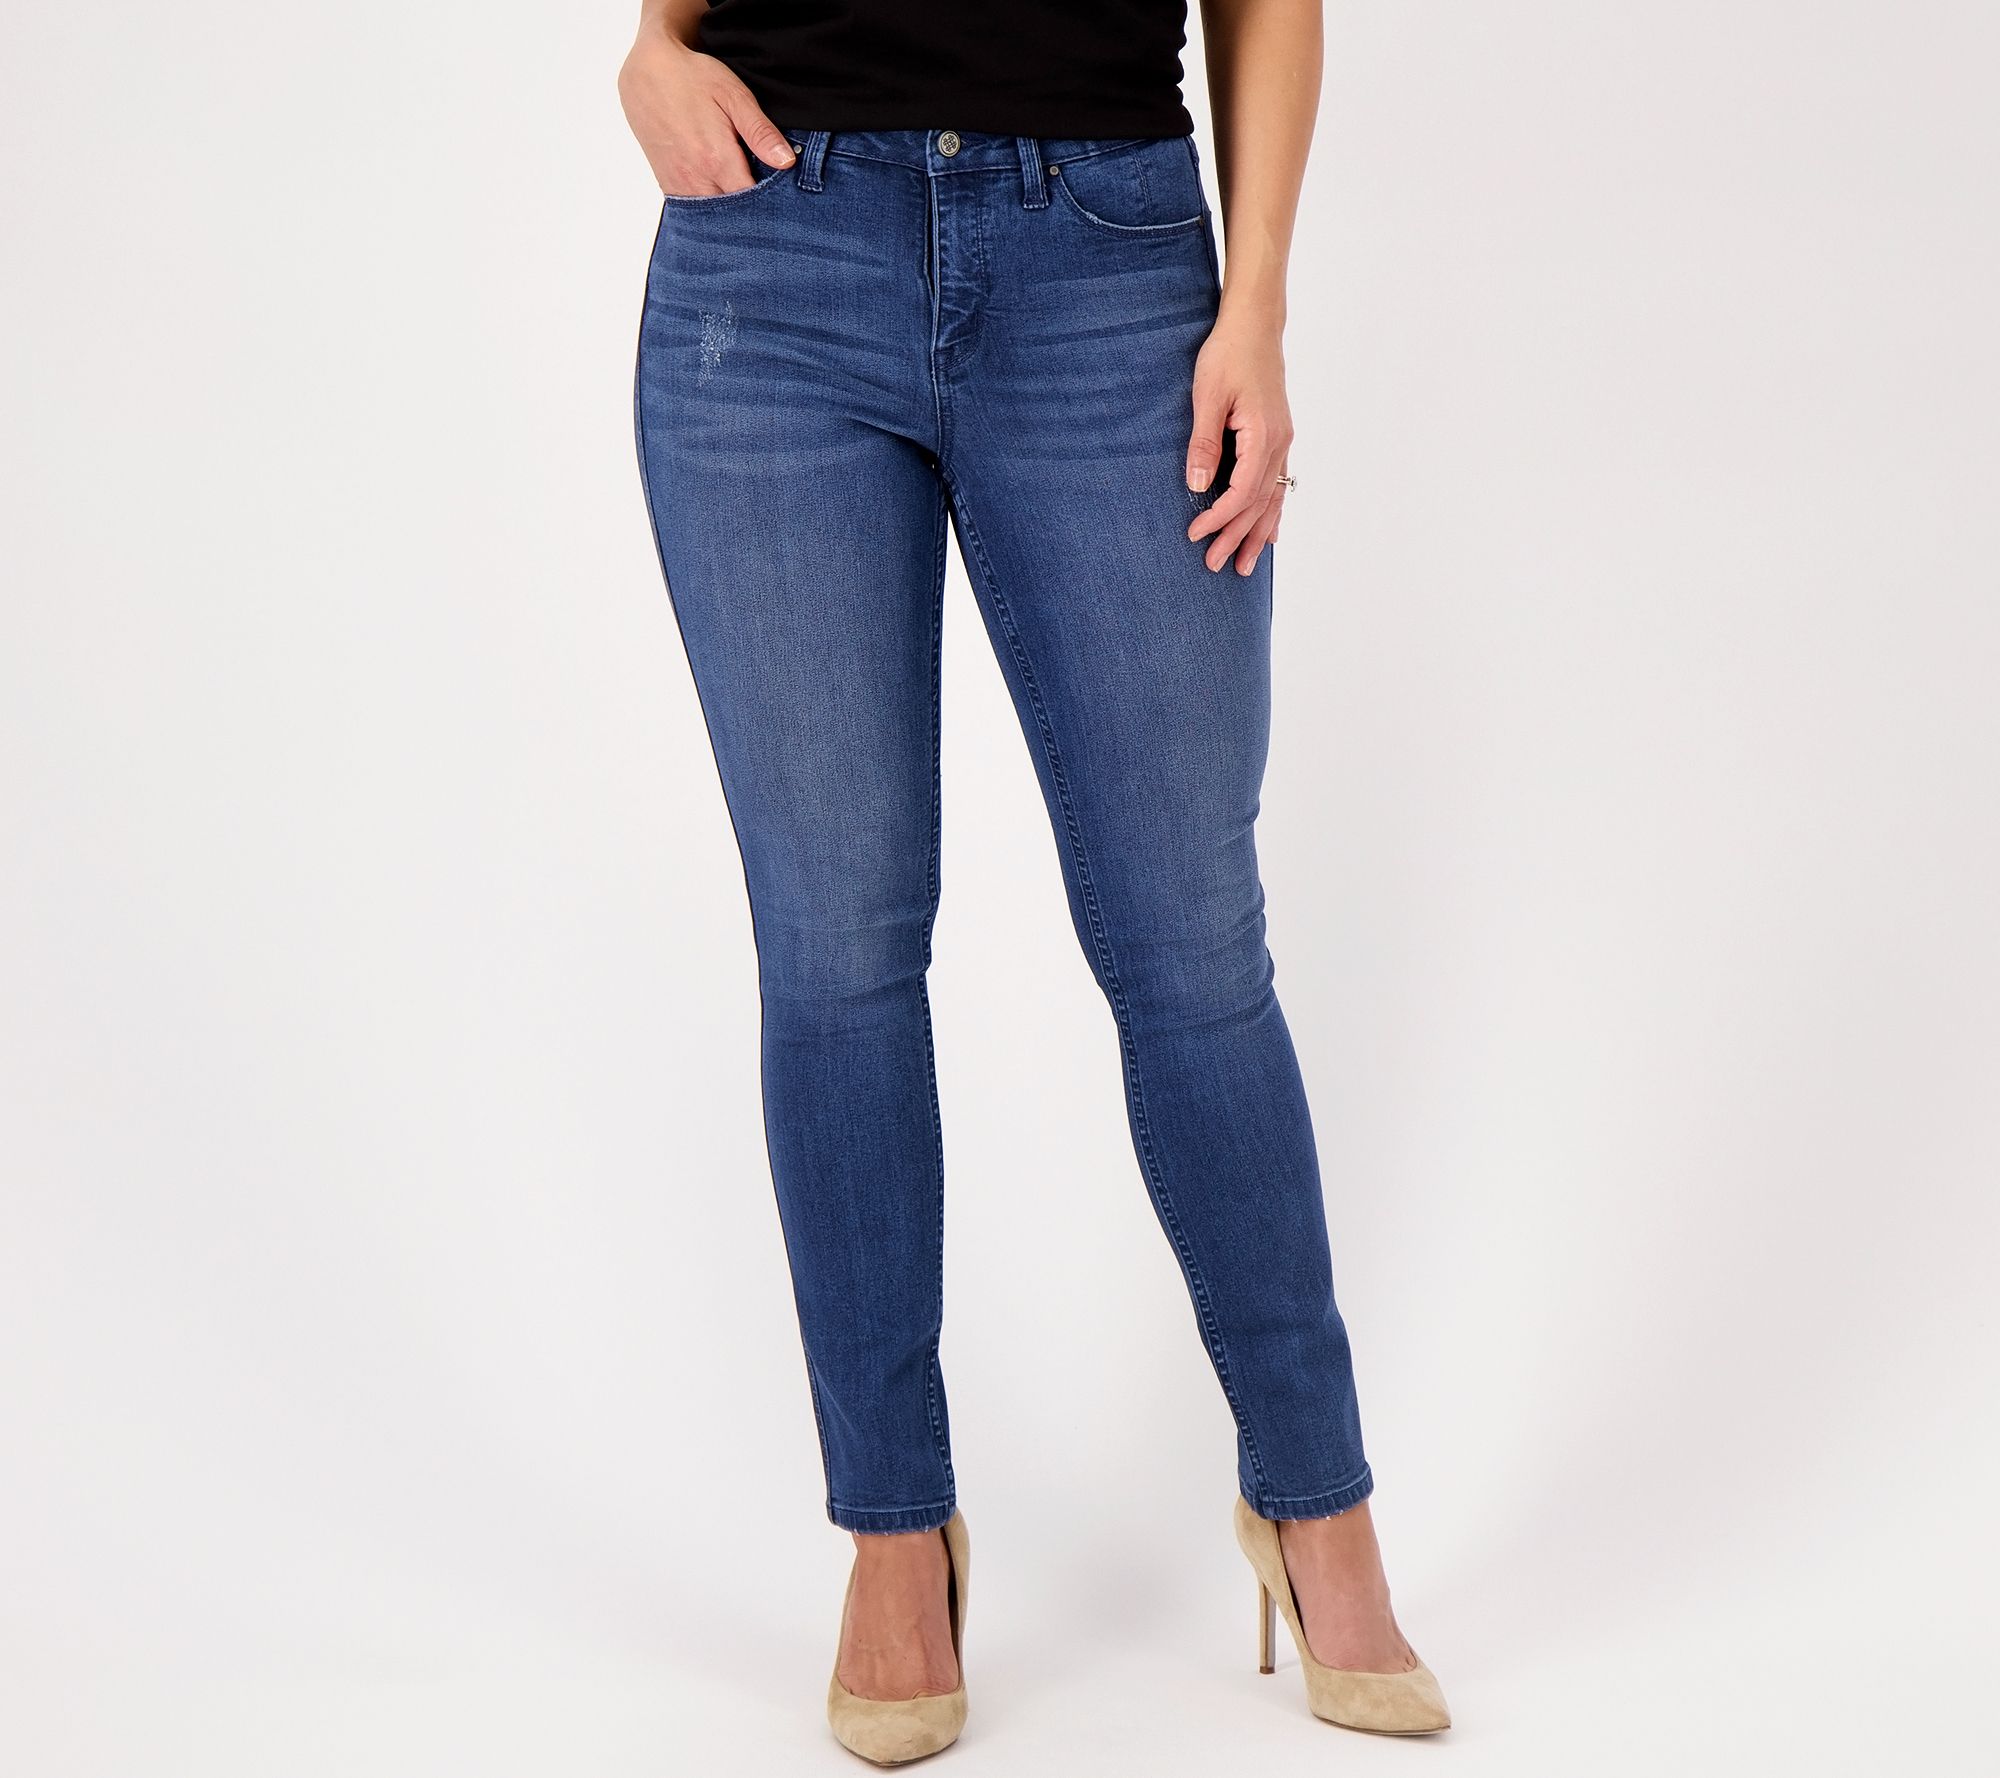 Laurie Felt Regular Silky Denim Easy Skinny Jeans - QVC.com